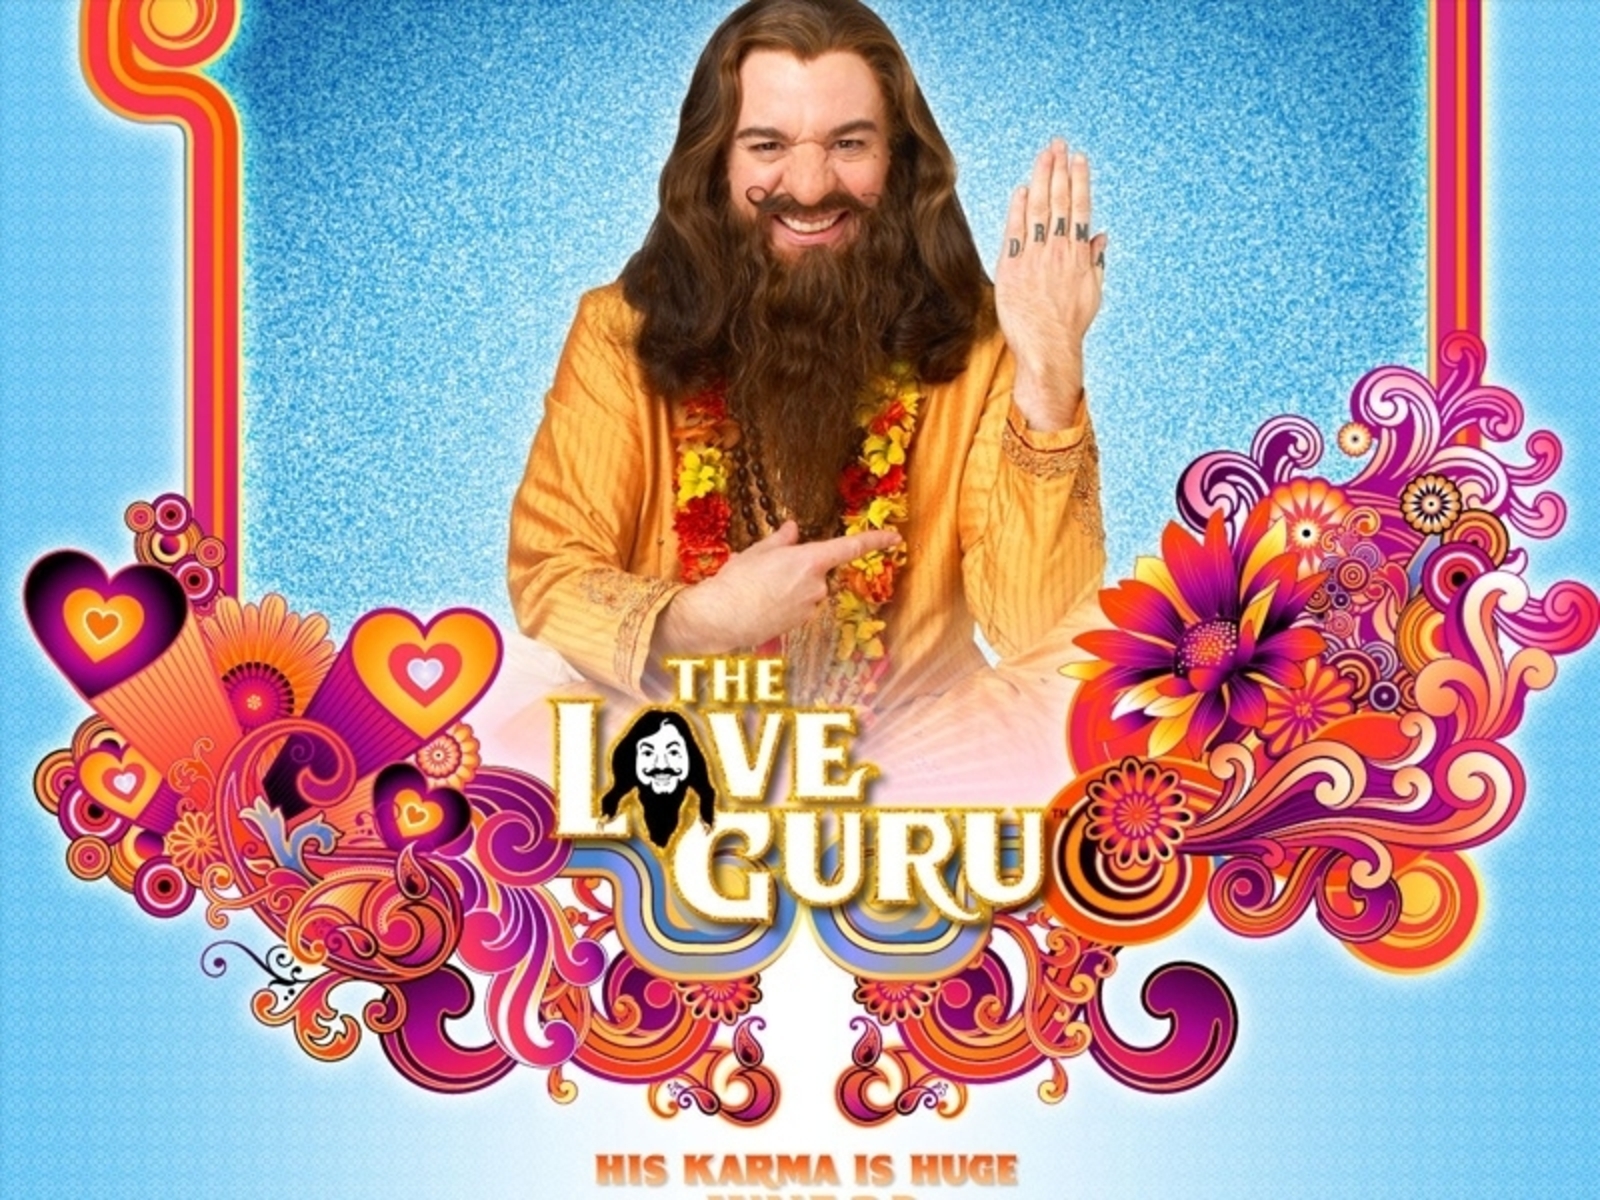 The Love Guru demo